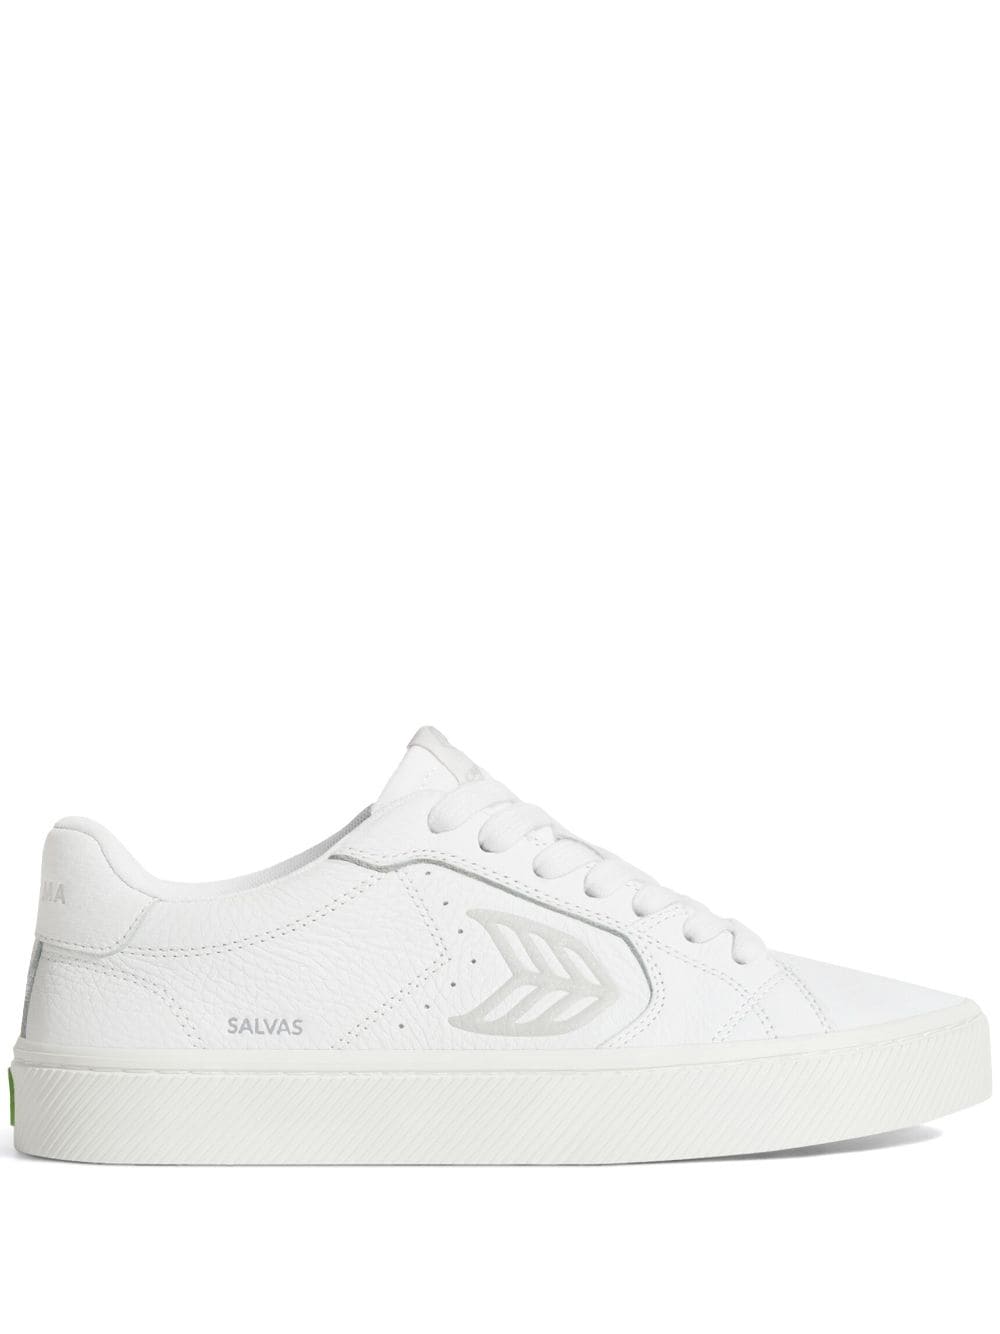 Cariuma Salvas low-top leather sneakers White